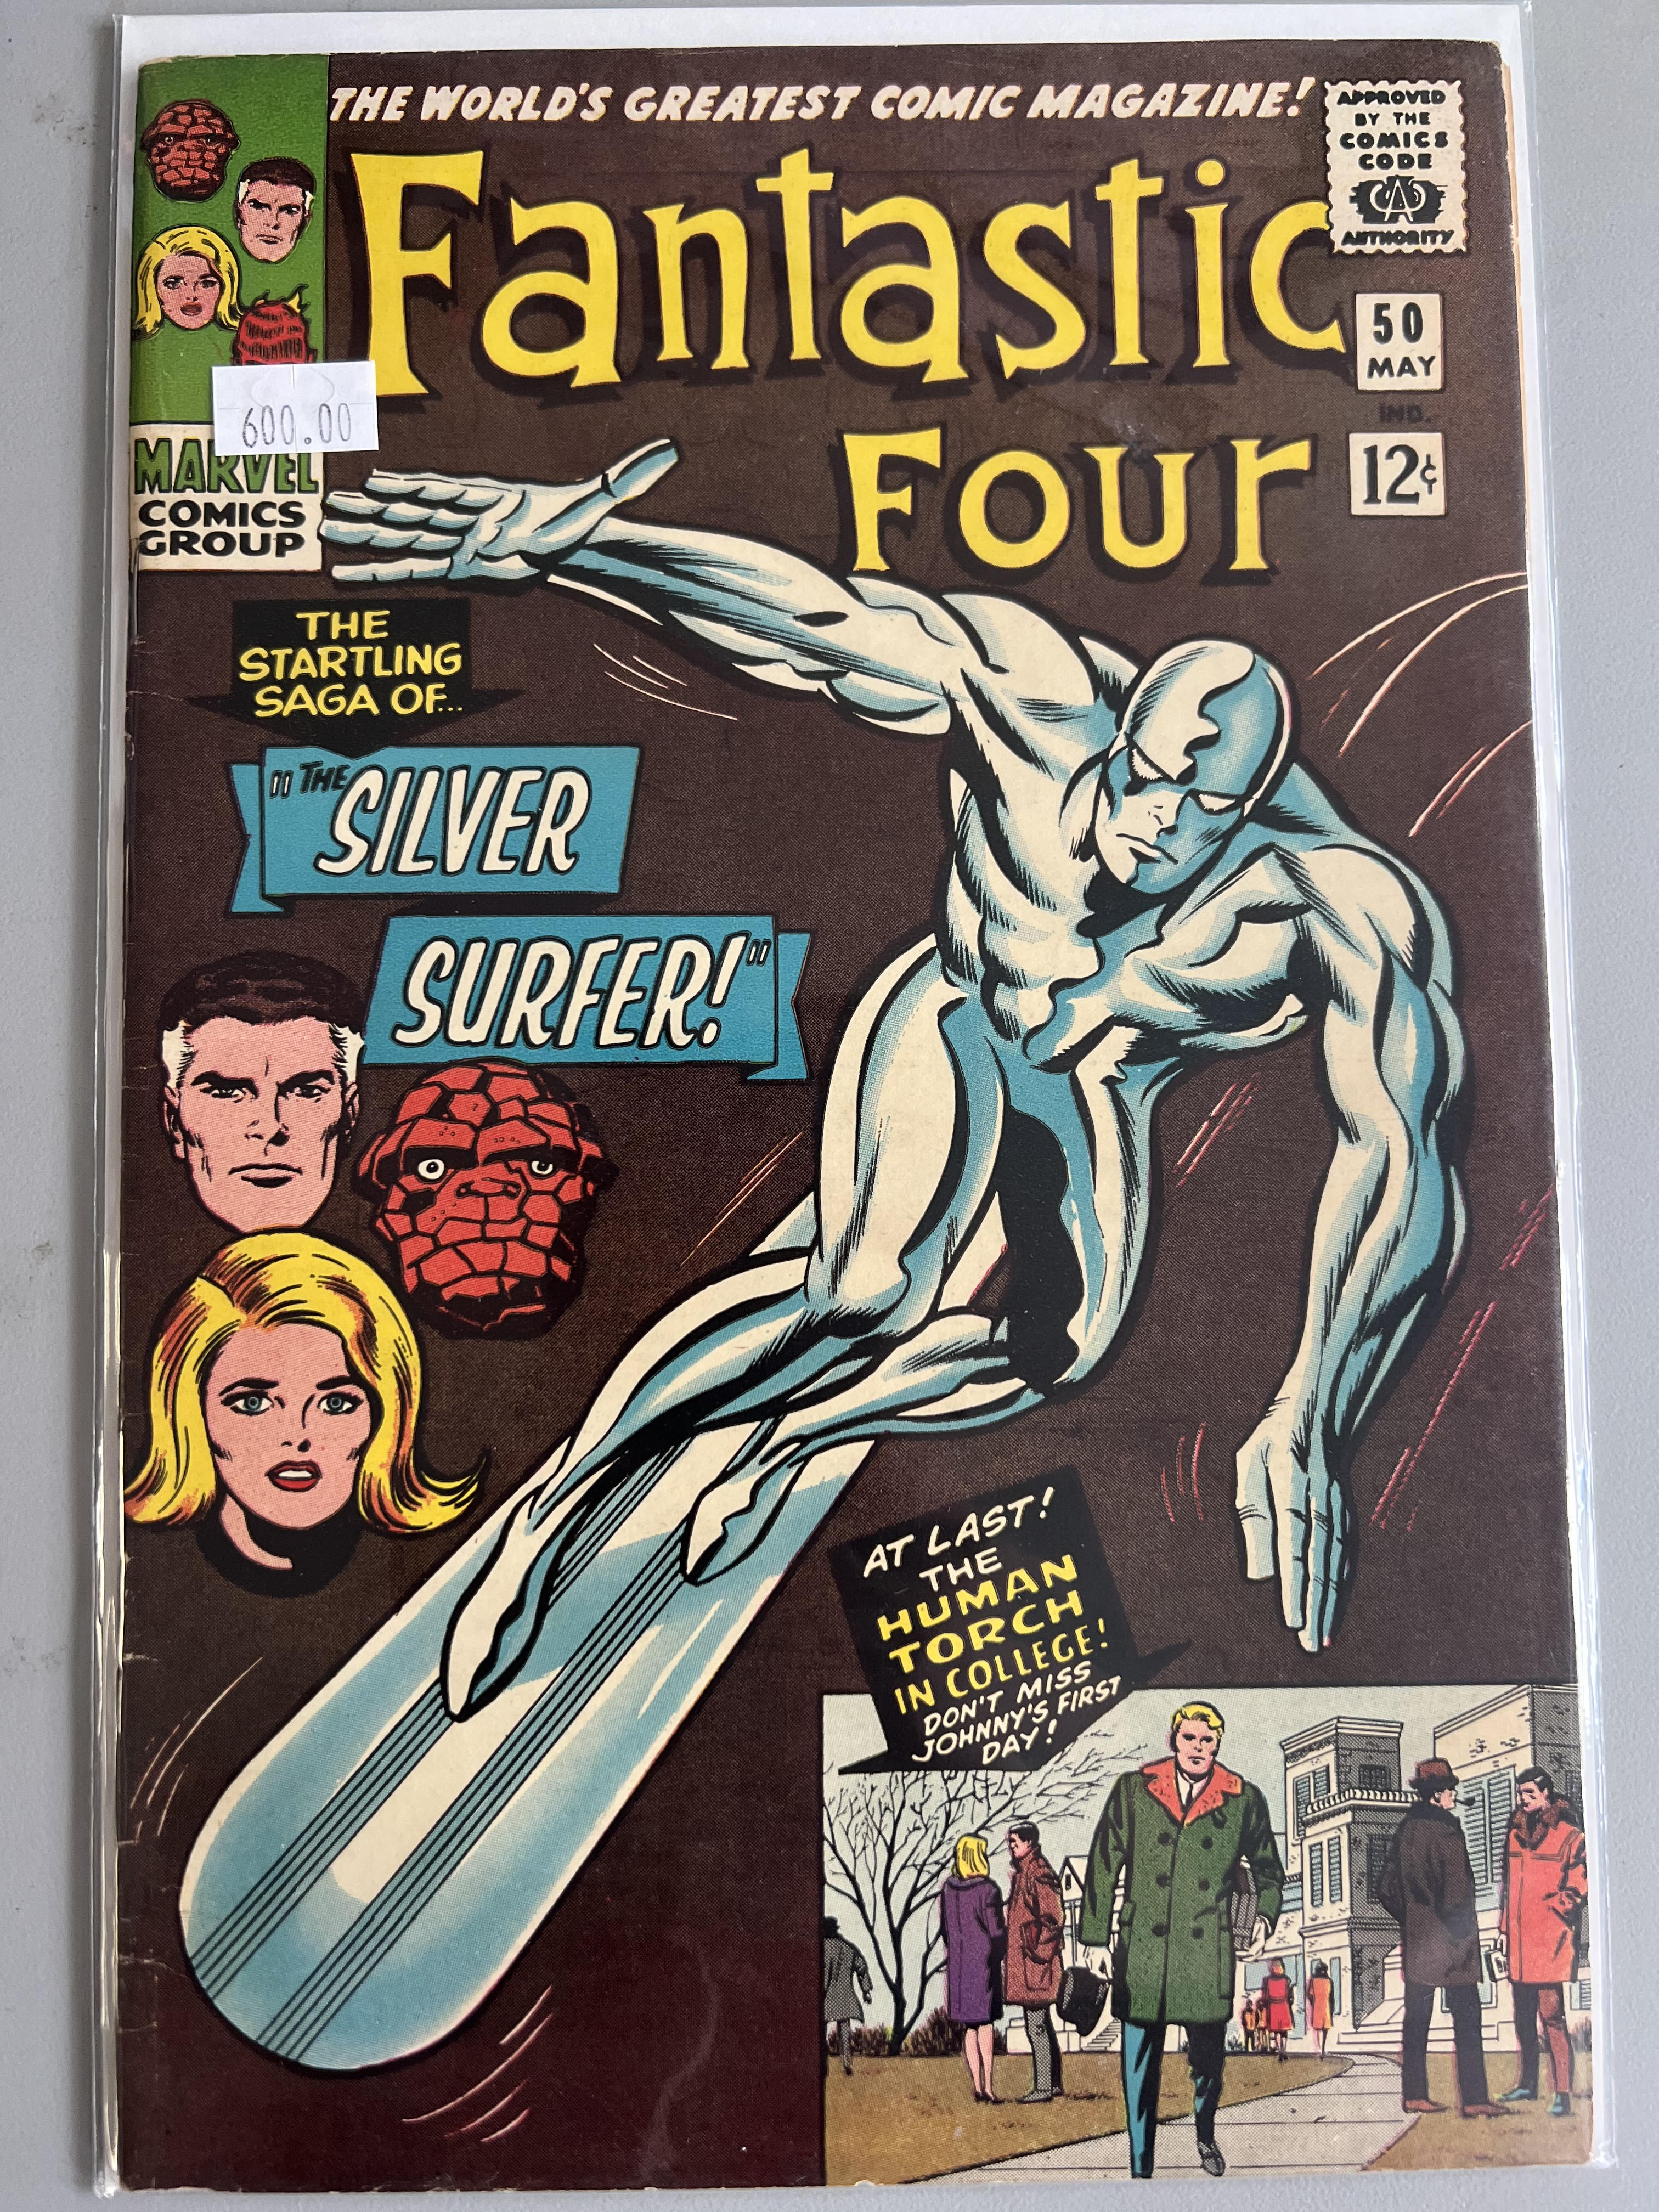 Fantastic Four #50 (1961 1st Series)